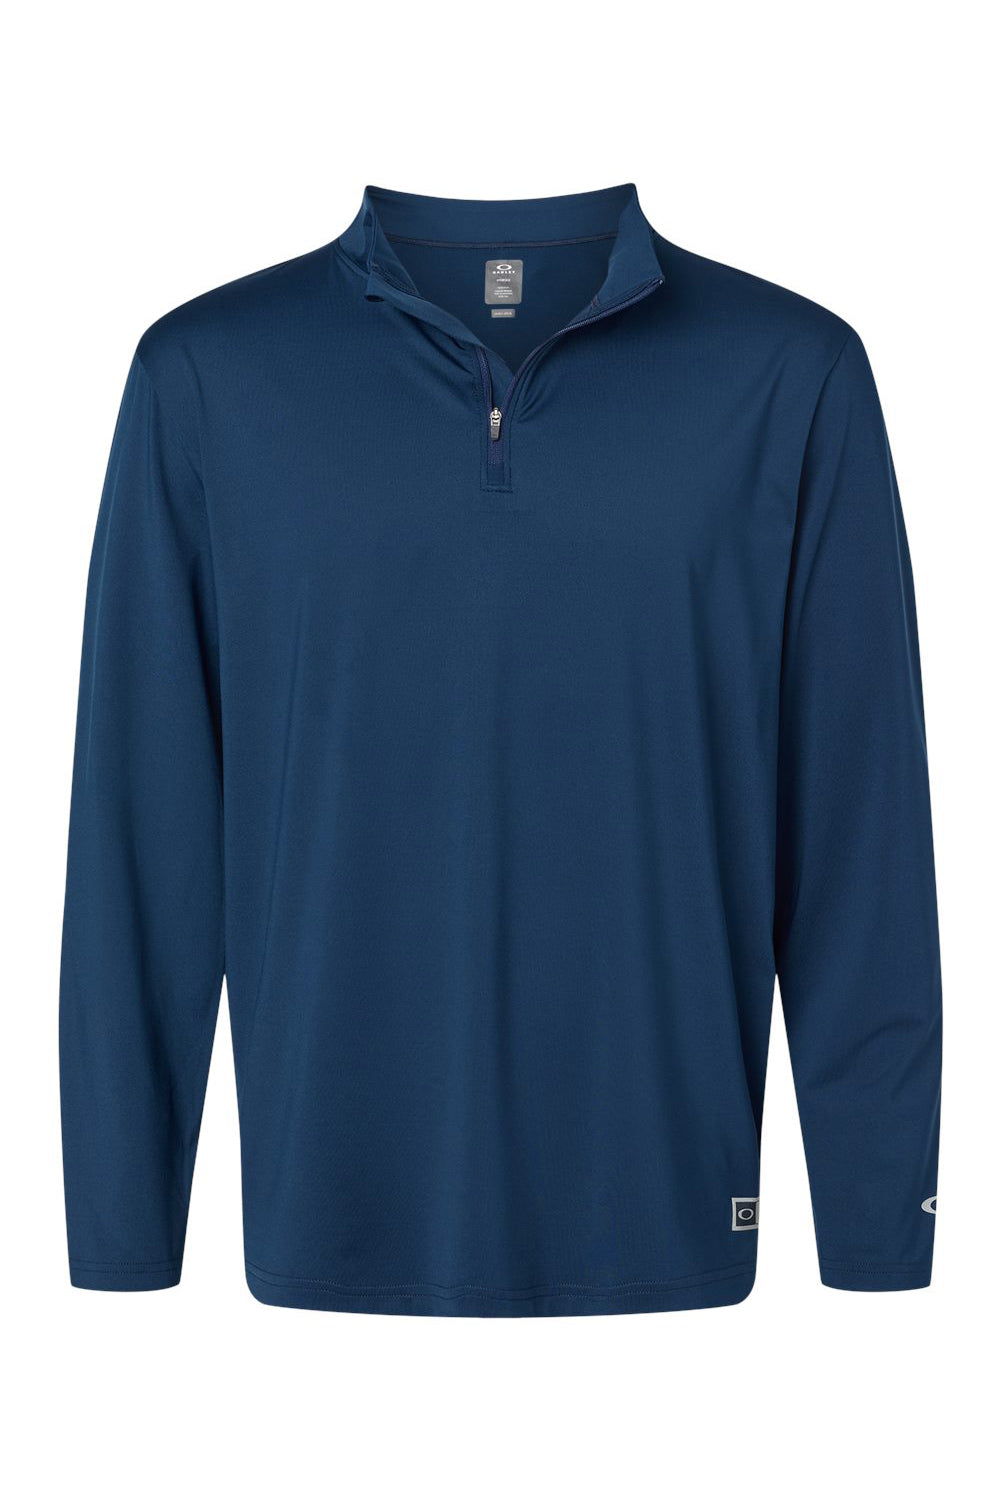 Oakley FOA402997 Mens Team Issue Podium 1/4 Zip Sweatshirt Team Navy Blue Flat Front